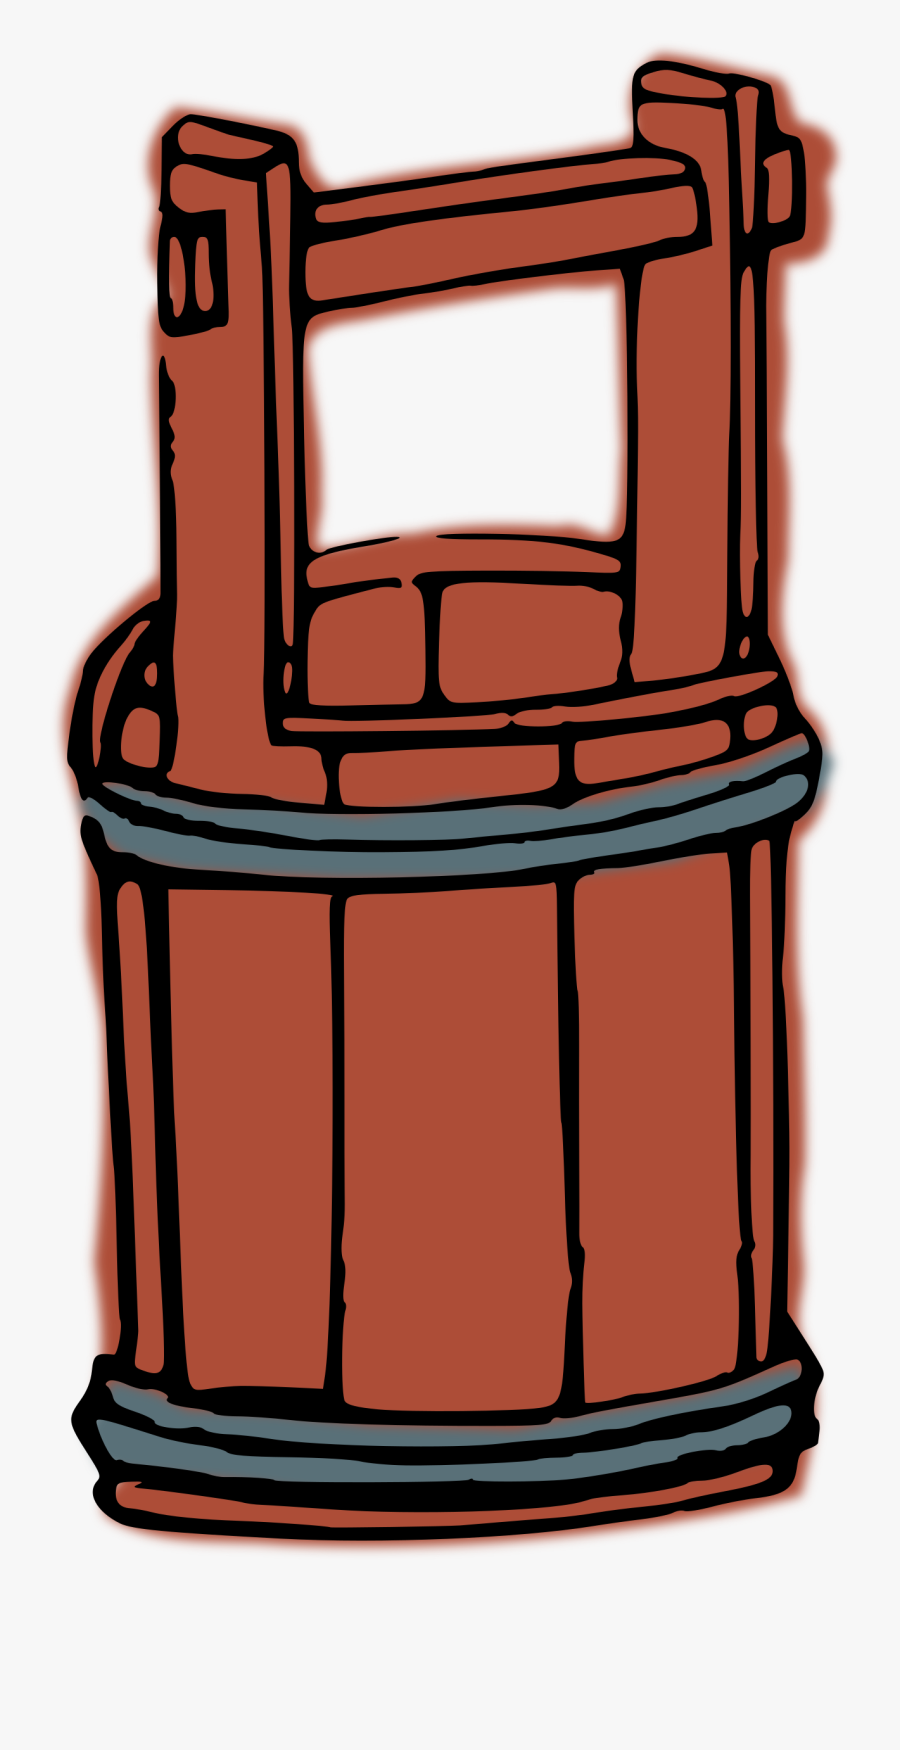 Tub Clipart Wooden Bucket - دلو بئر كرتون, Transparent Clipart